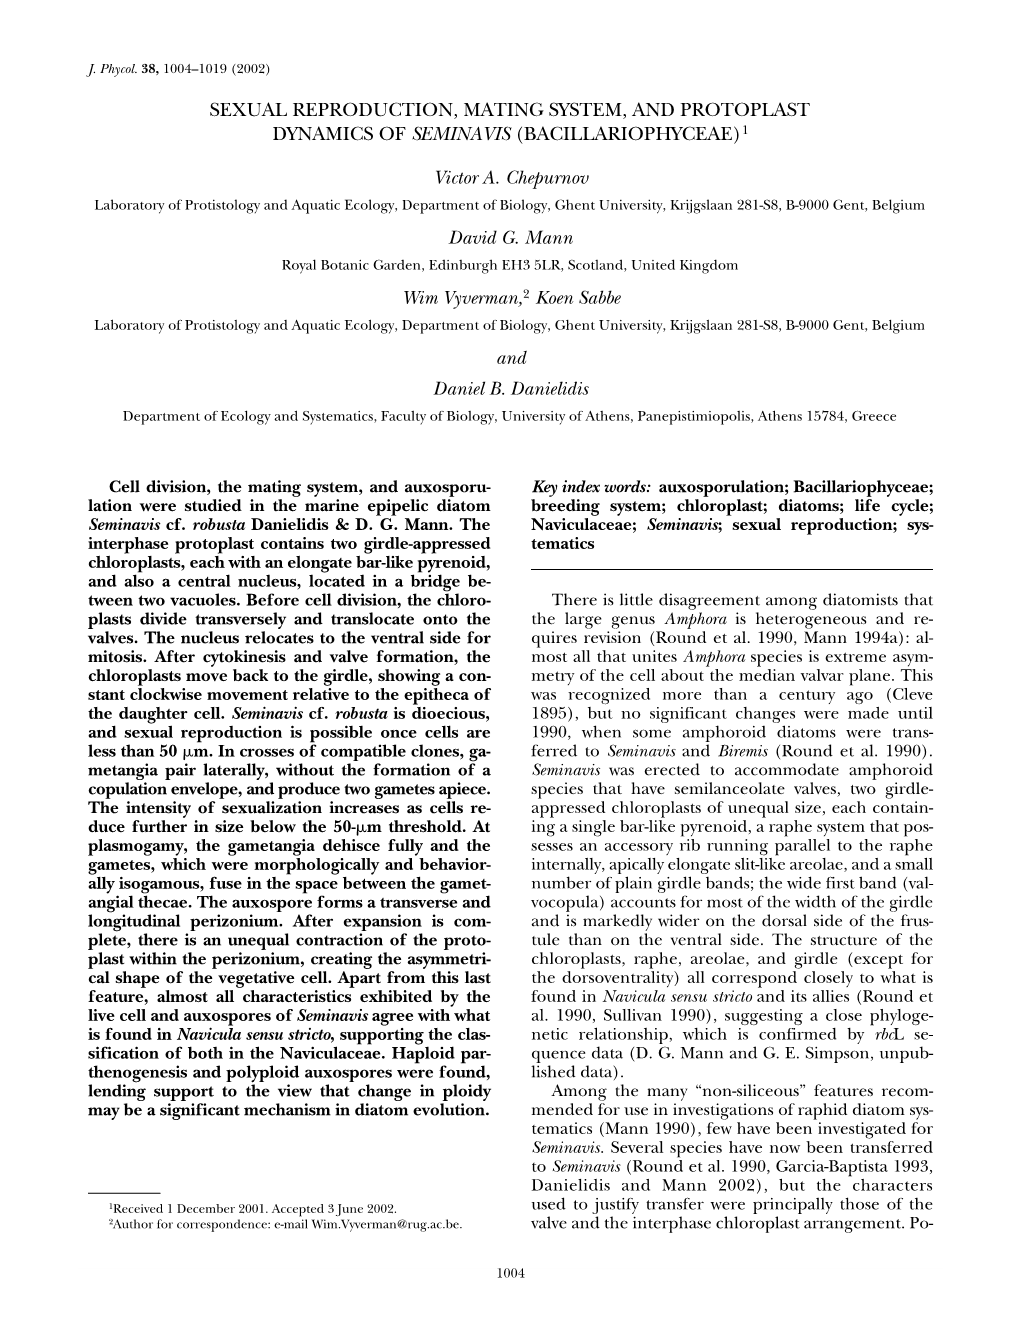 Sexual Reproduction, Mating System, and Protoplast Dynamics of Seminavis (Bacillariophyceae)1